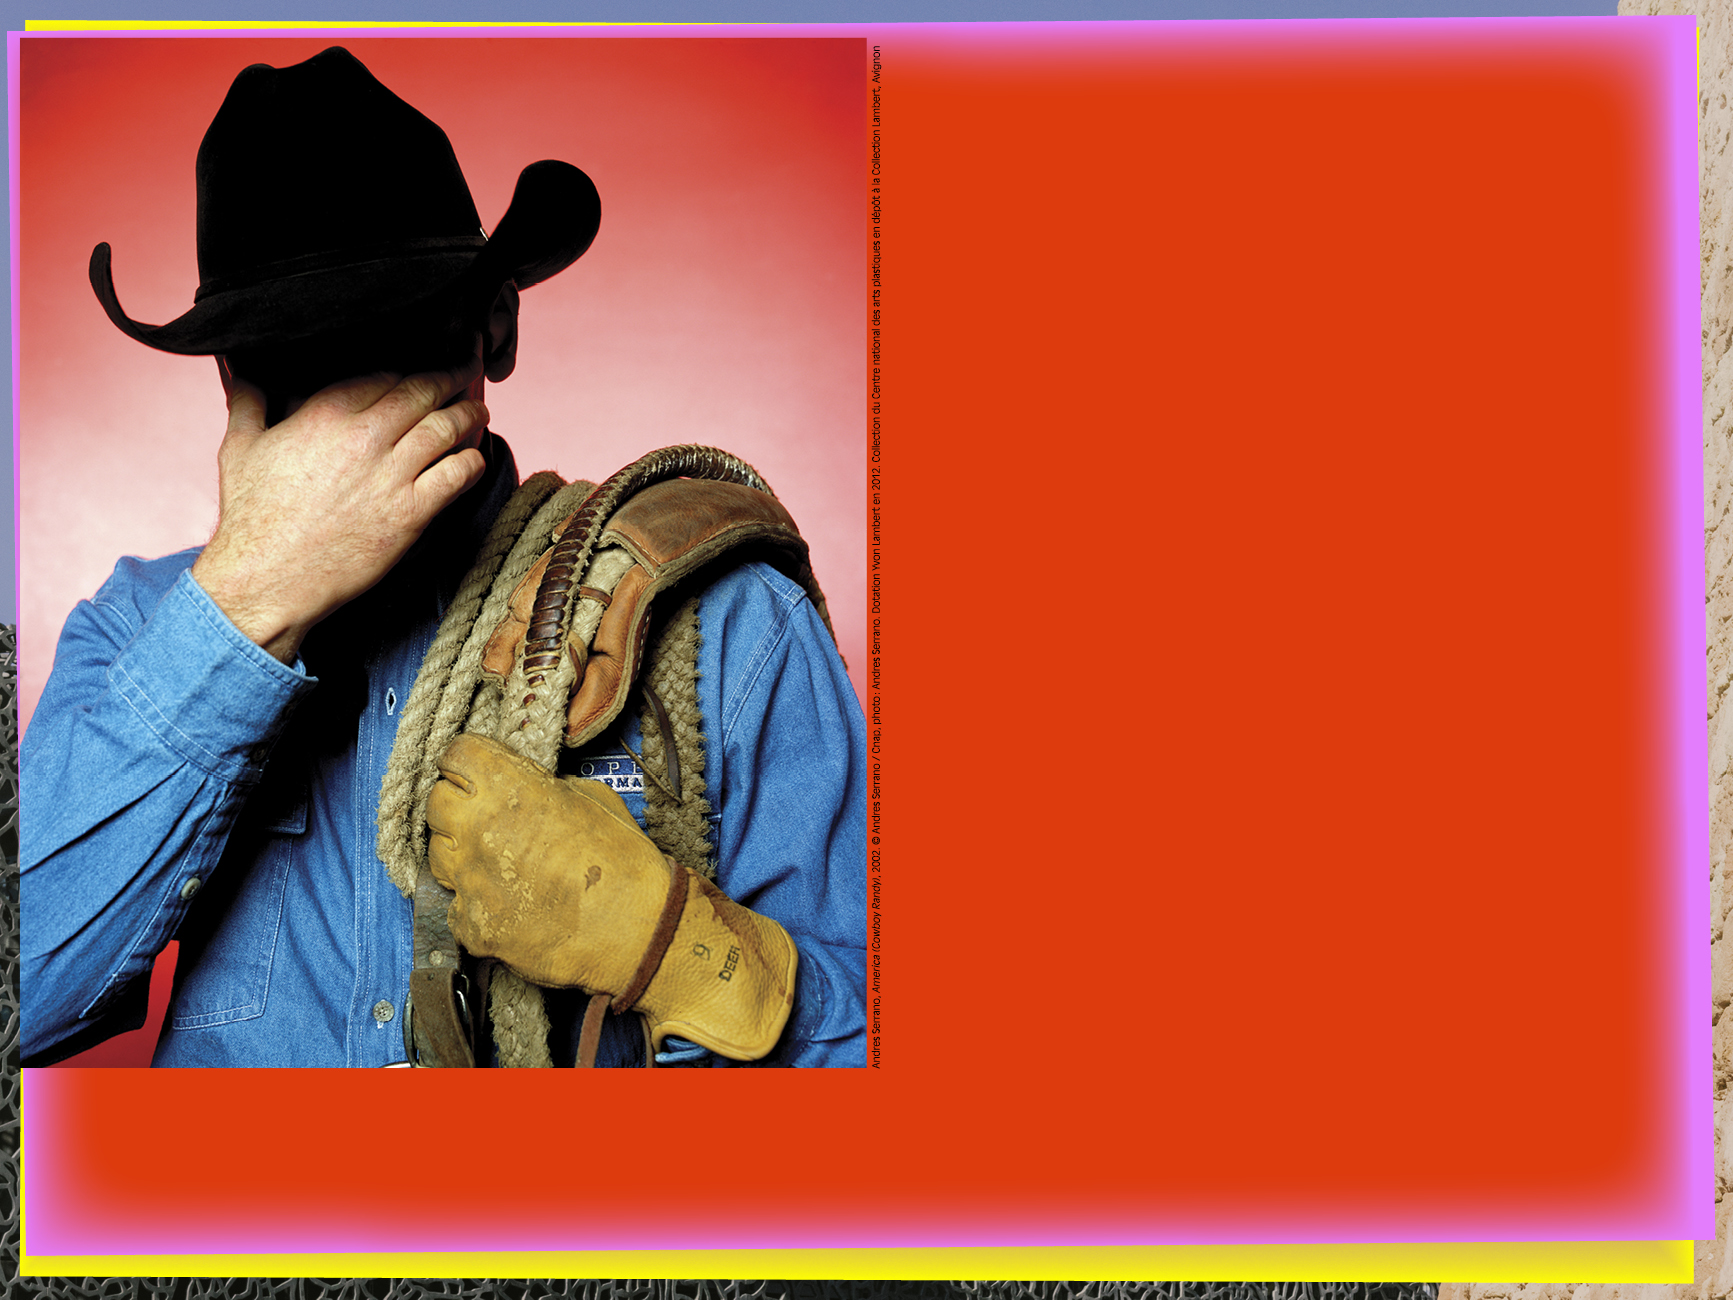 Andres Serrano America (Cowboy Randy), 2002 © Andres Serrano / Cnap, photo : Andres Serrano FNAC 2015-0130 Dotation Yvon Lambert en 2012 Collection du Centre national des arts plastiques en dépôt à la Collection Lambert, Avignon